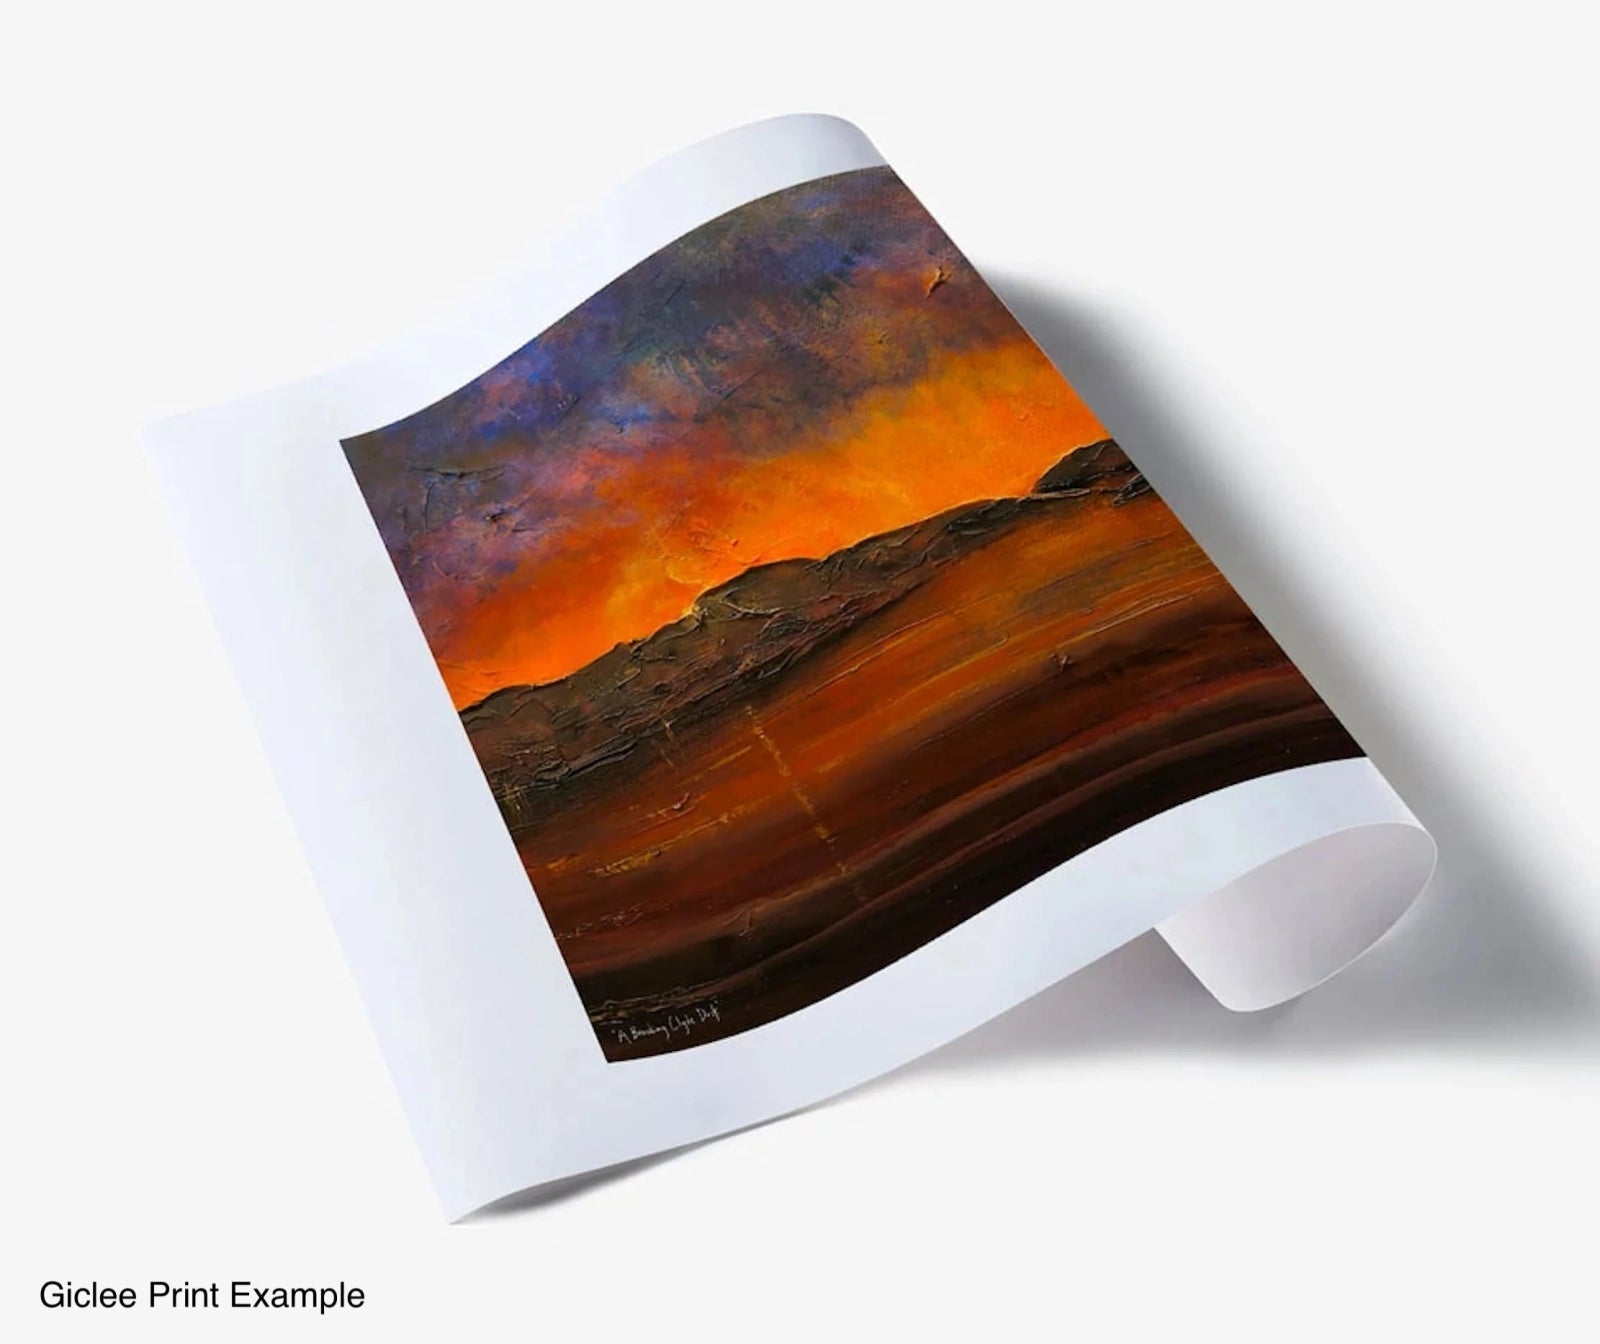 Blackwaterfoot Arran-Panoramic Prints-Arran Art Gallery-Paintings, Prints, Homeware, Art Gifts From Scotland By Scottish Artist Kevin Hunter